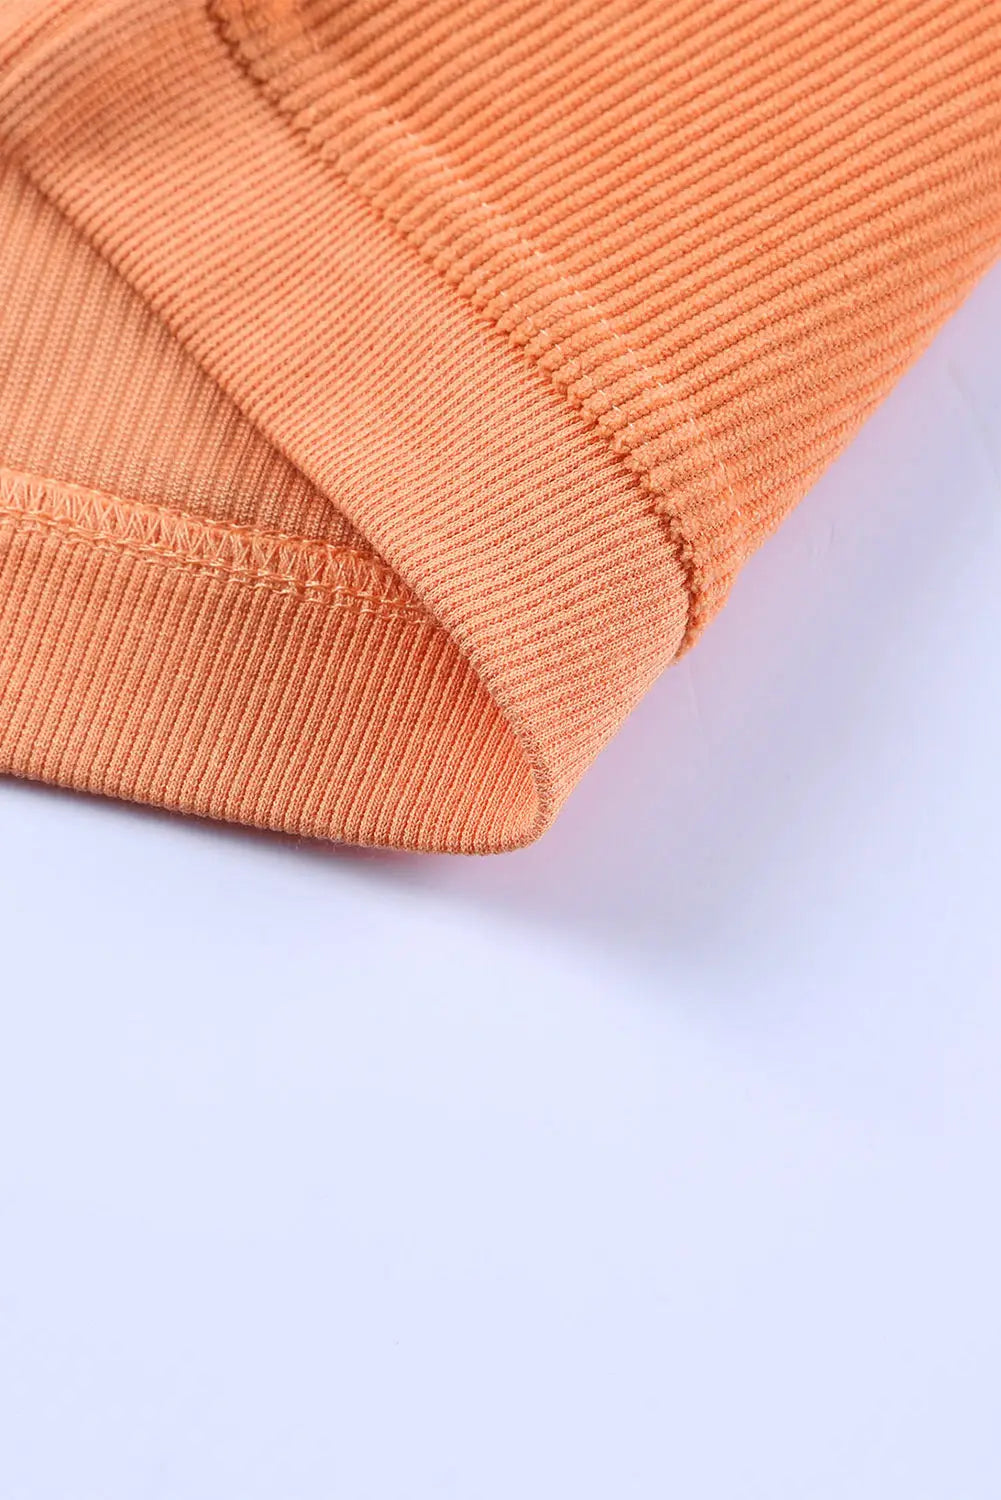 Apricot ribbed corded oversized sweatshirt - tops